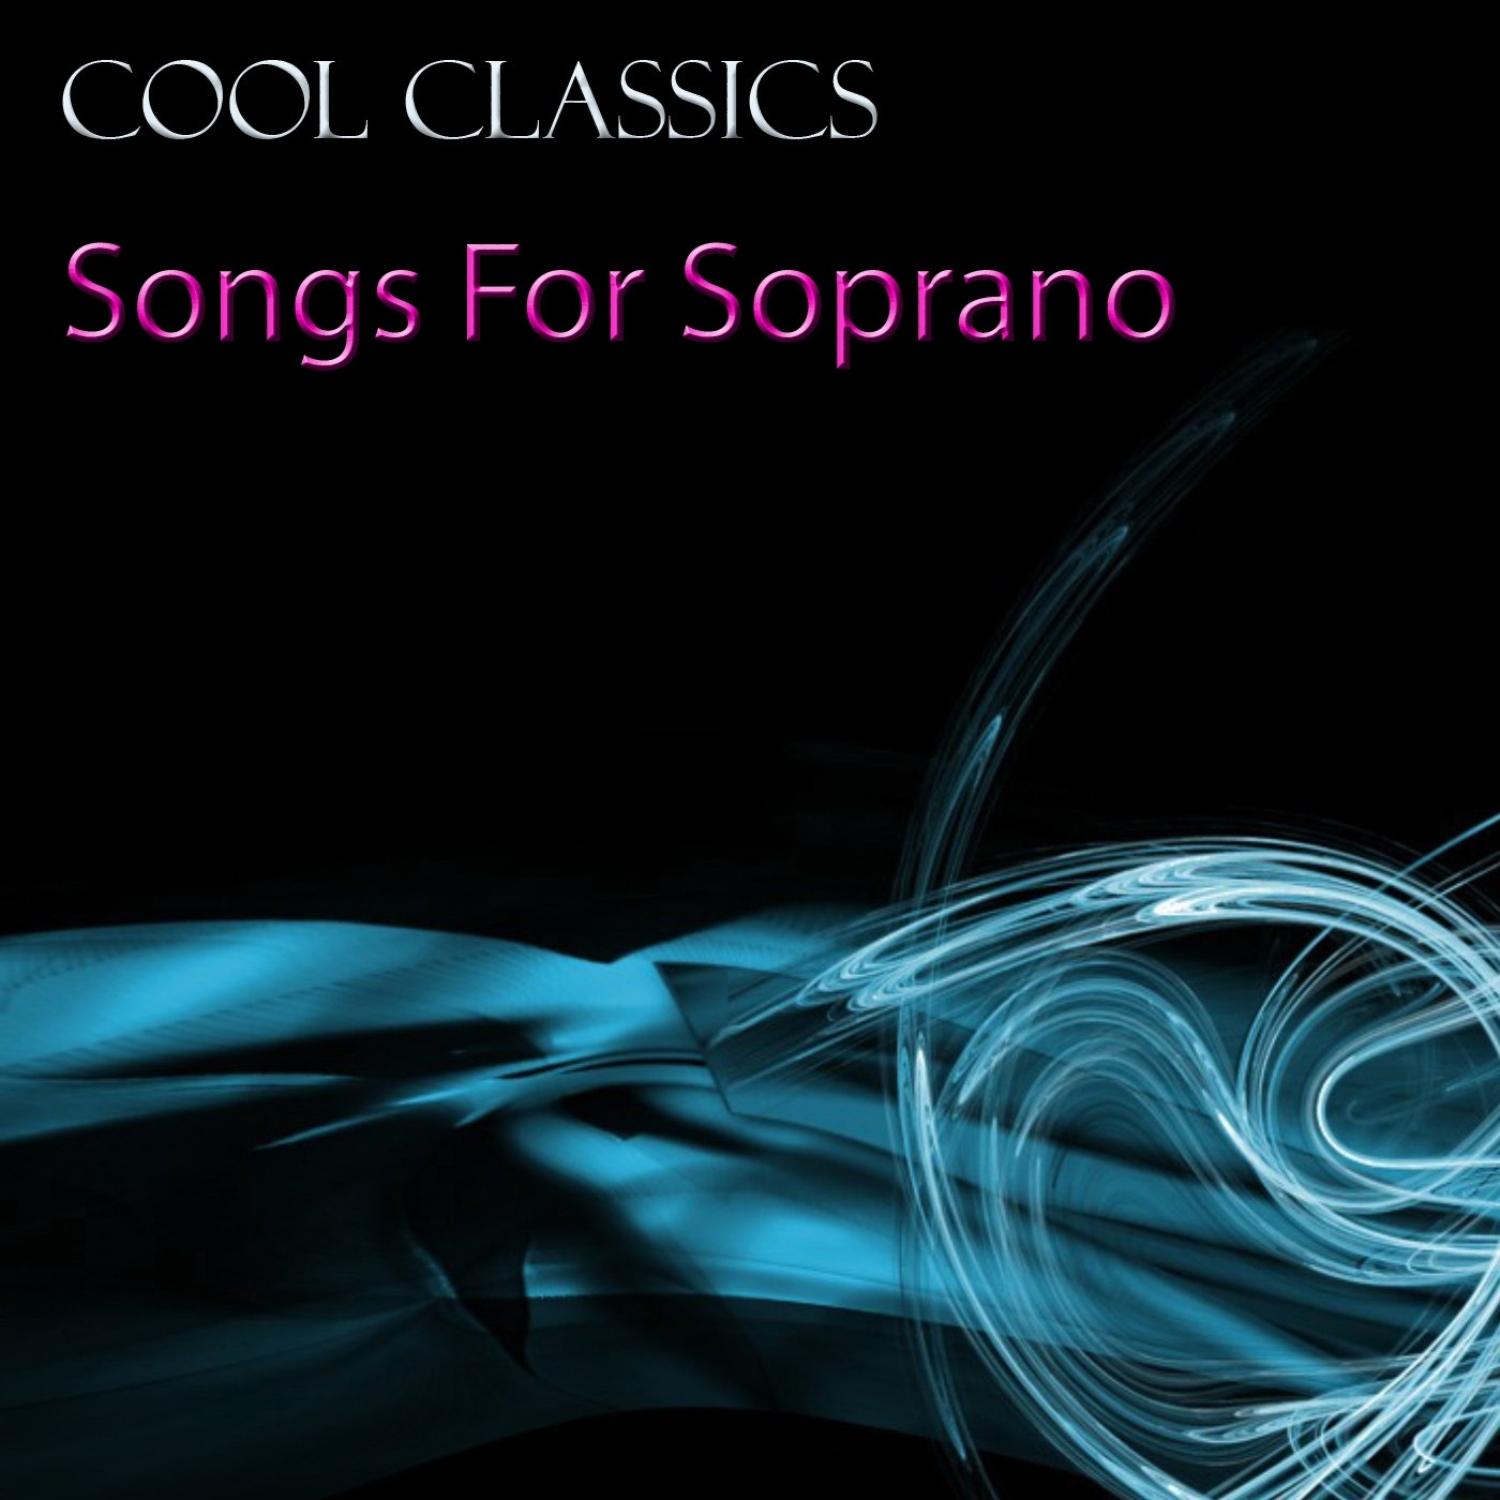 Songs for Sopranos